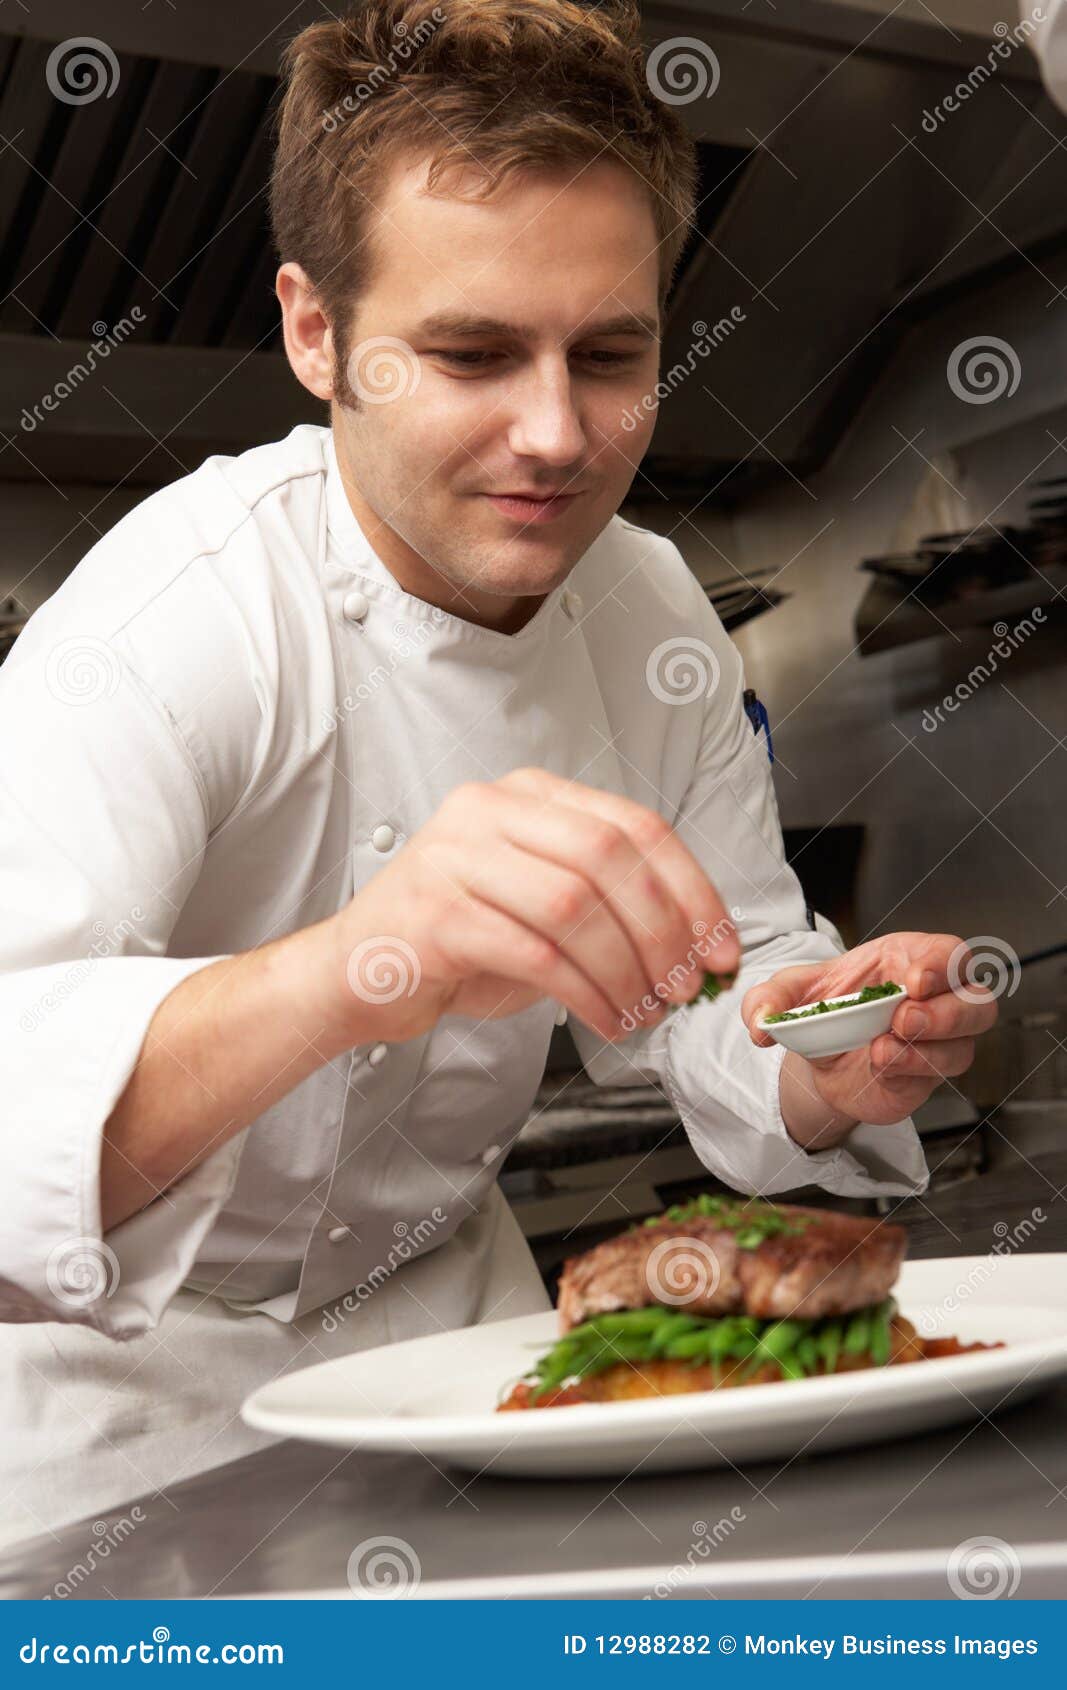 chef adding seasoning to dish in restaurant